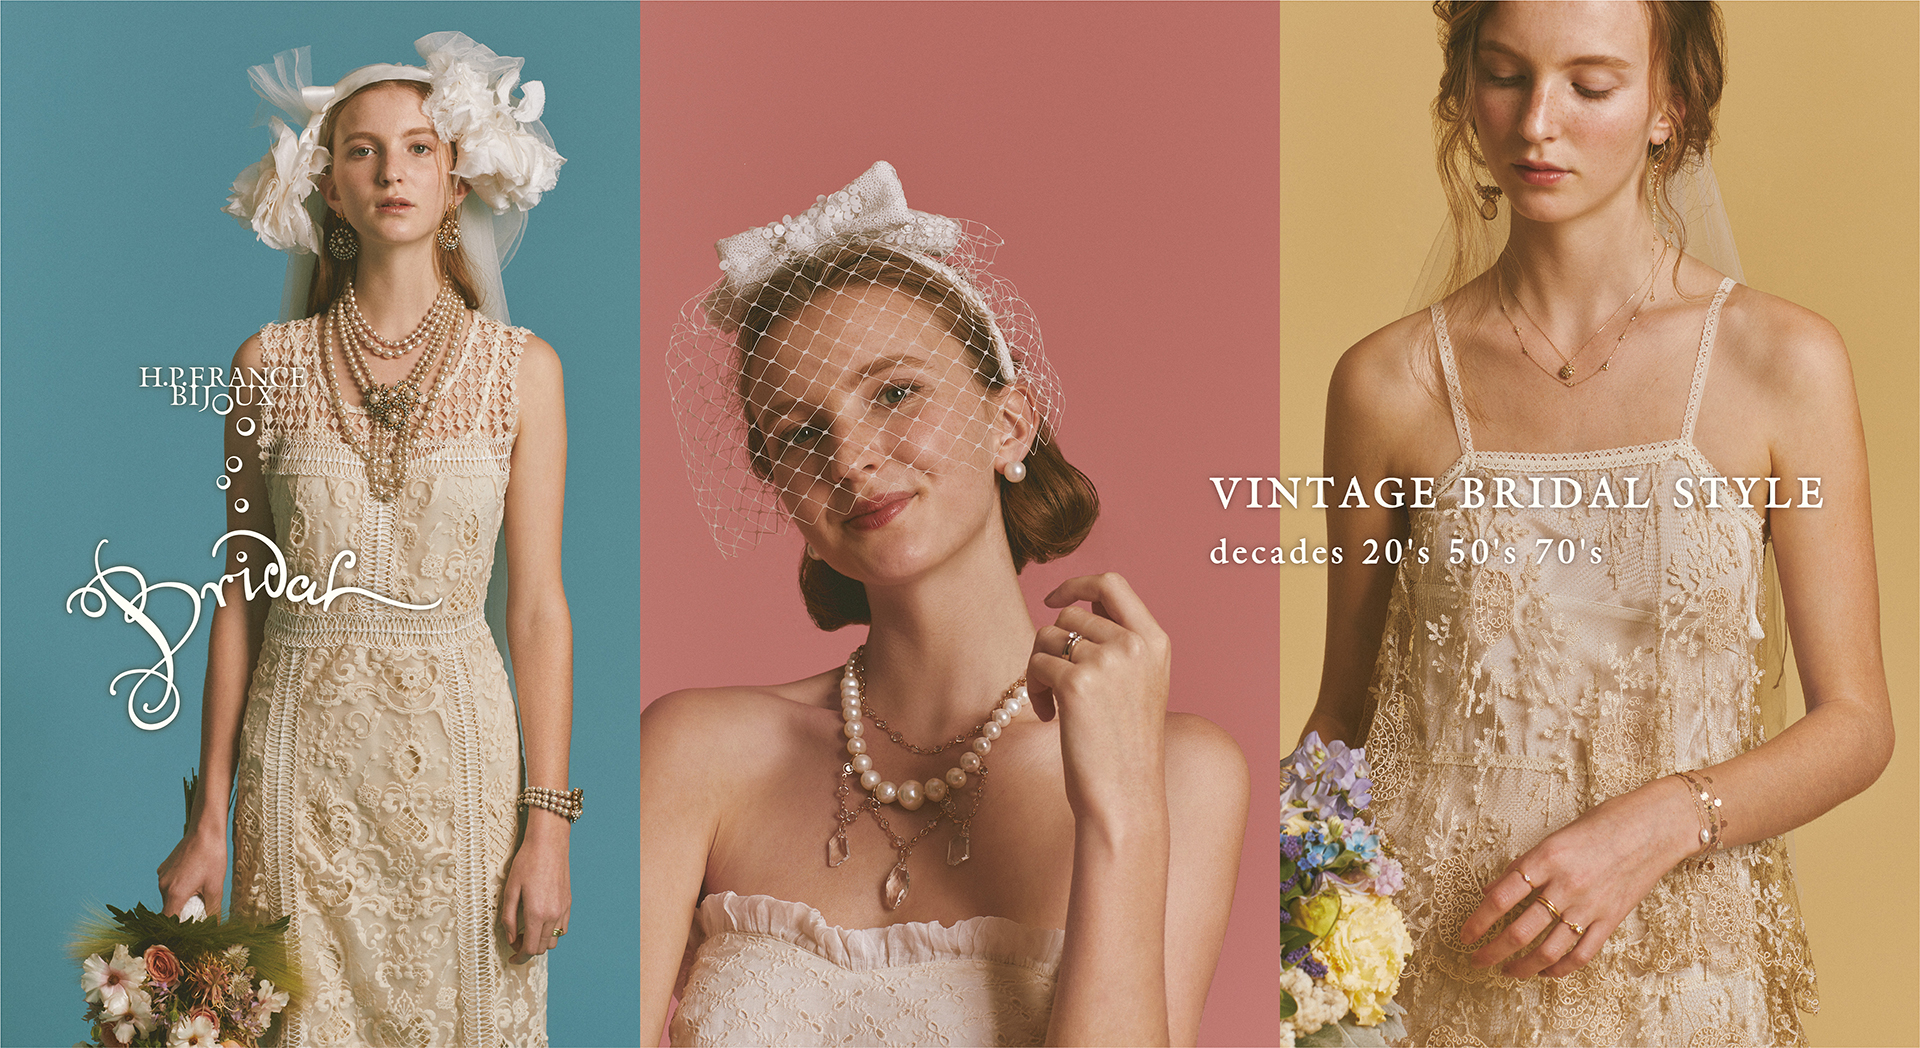 Feature Vintage Bridal Style Feature 公式 H P France Bijoux アッシュ ペー フランス ビジュー 公式サイト ジュエリー ブライダル ヴィンテージ